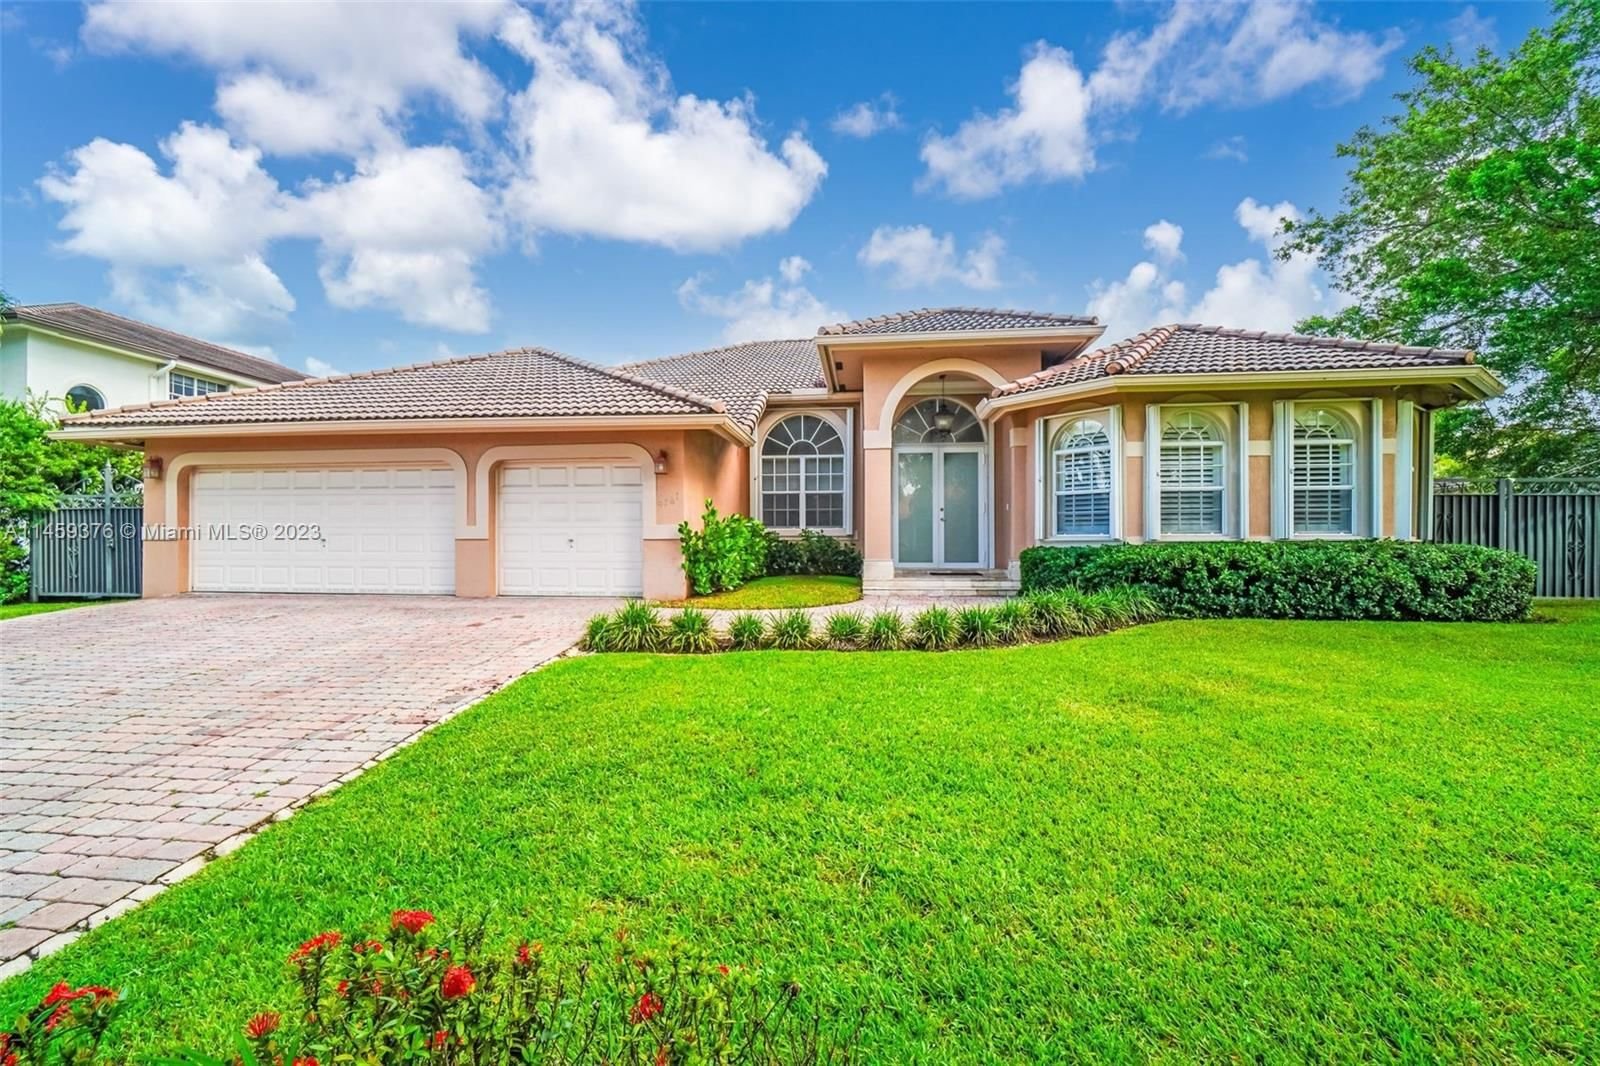 Real estate property located at 9761 28th Ter, Miami-Dade County, VANDERBILT PARK AMD PL, Doral, FL